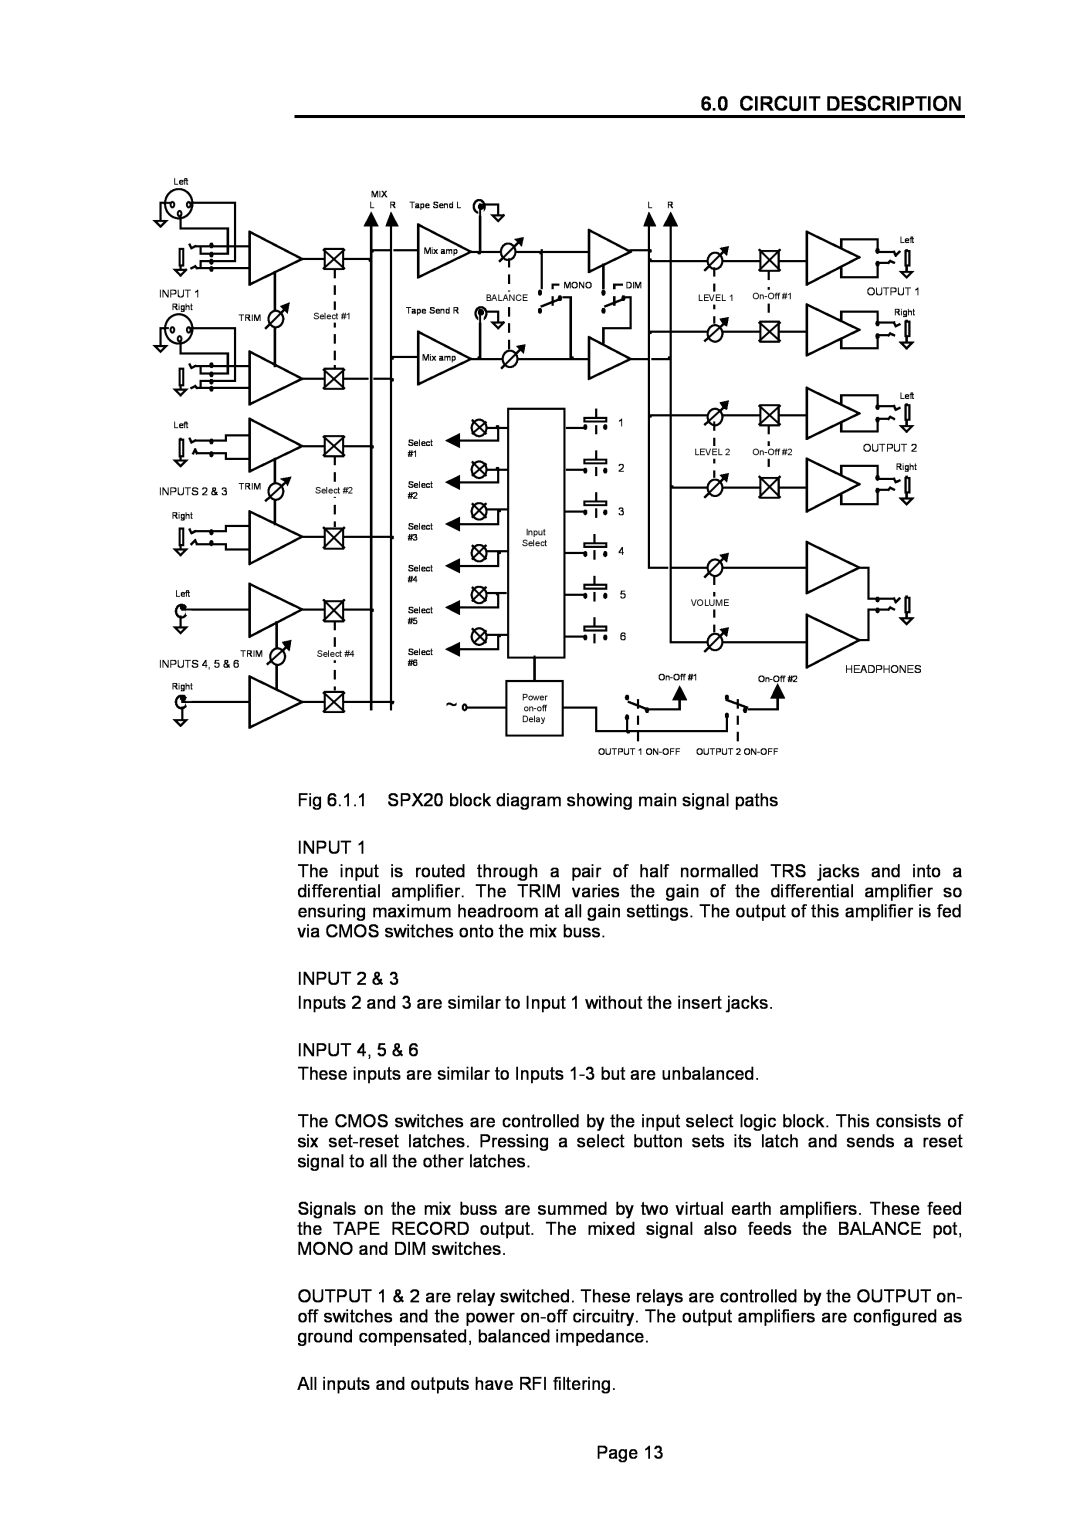 LA Audio Electronic SPX20 operation manual Circuit Description 